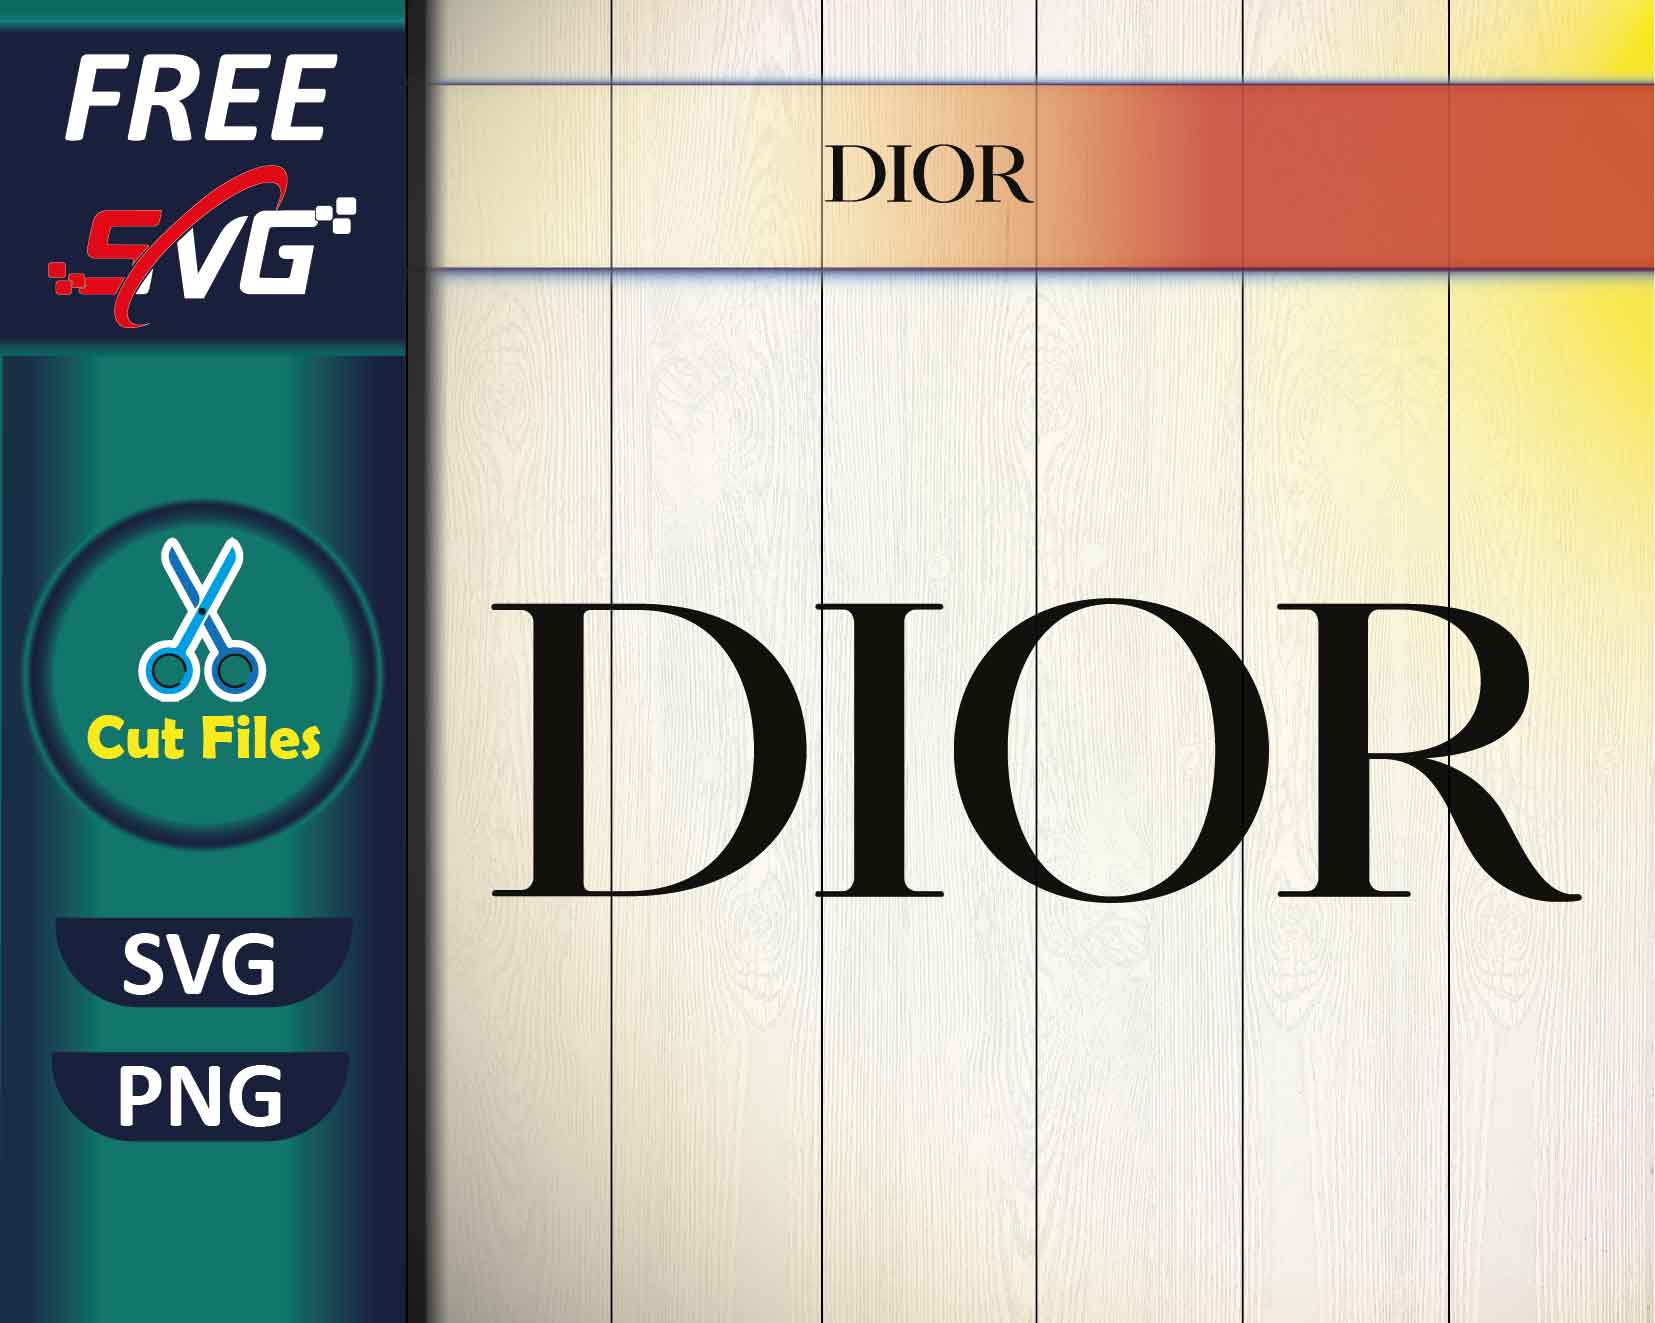 Dior  Christian Dior  TIẾN THÀNH BEAUTY